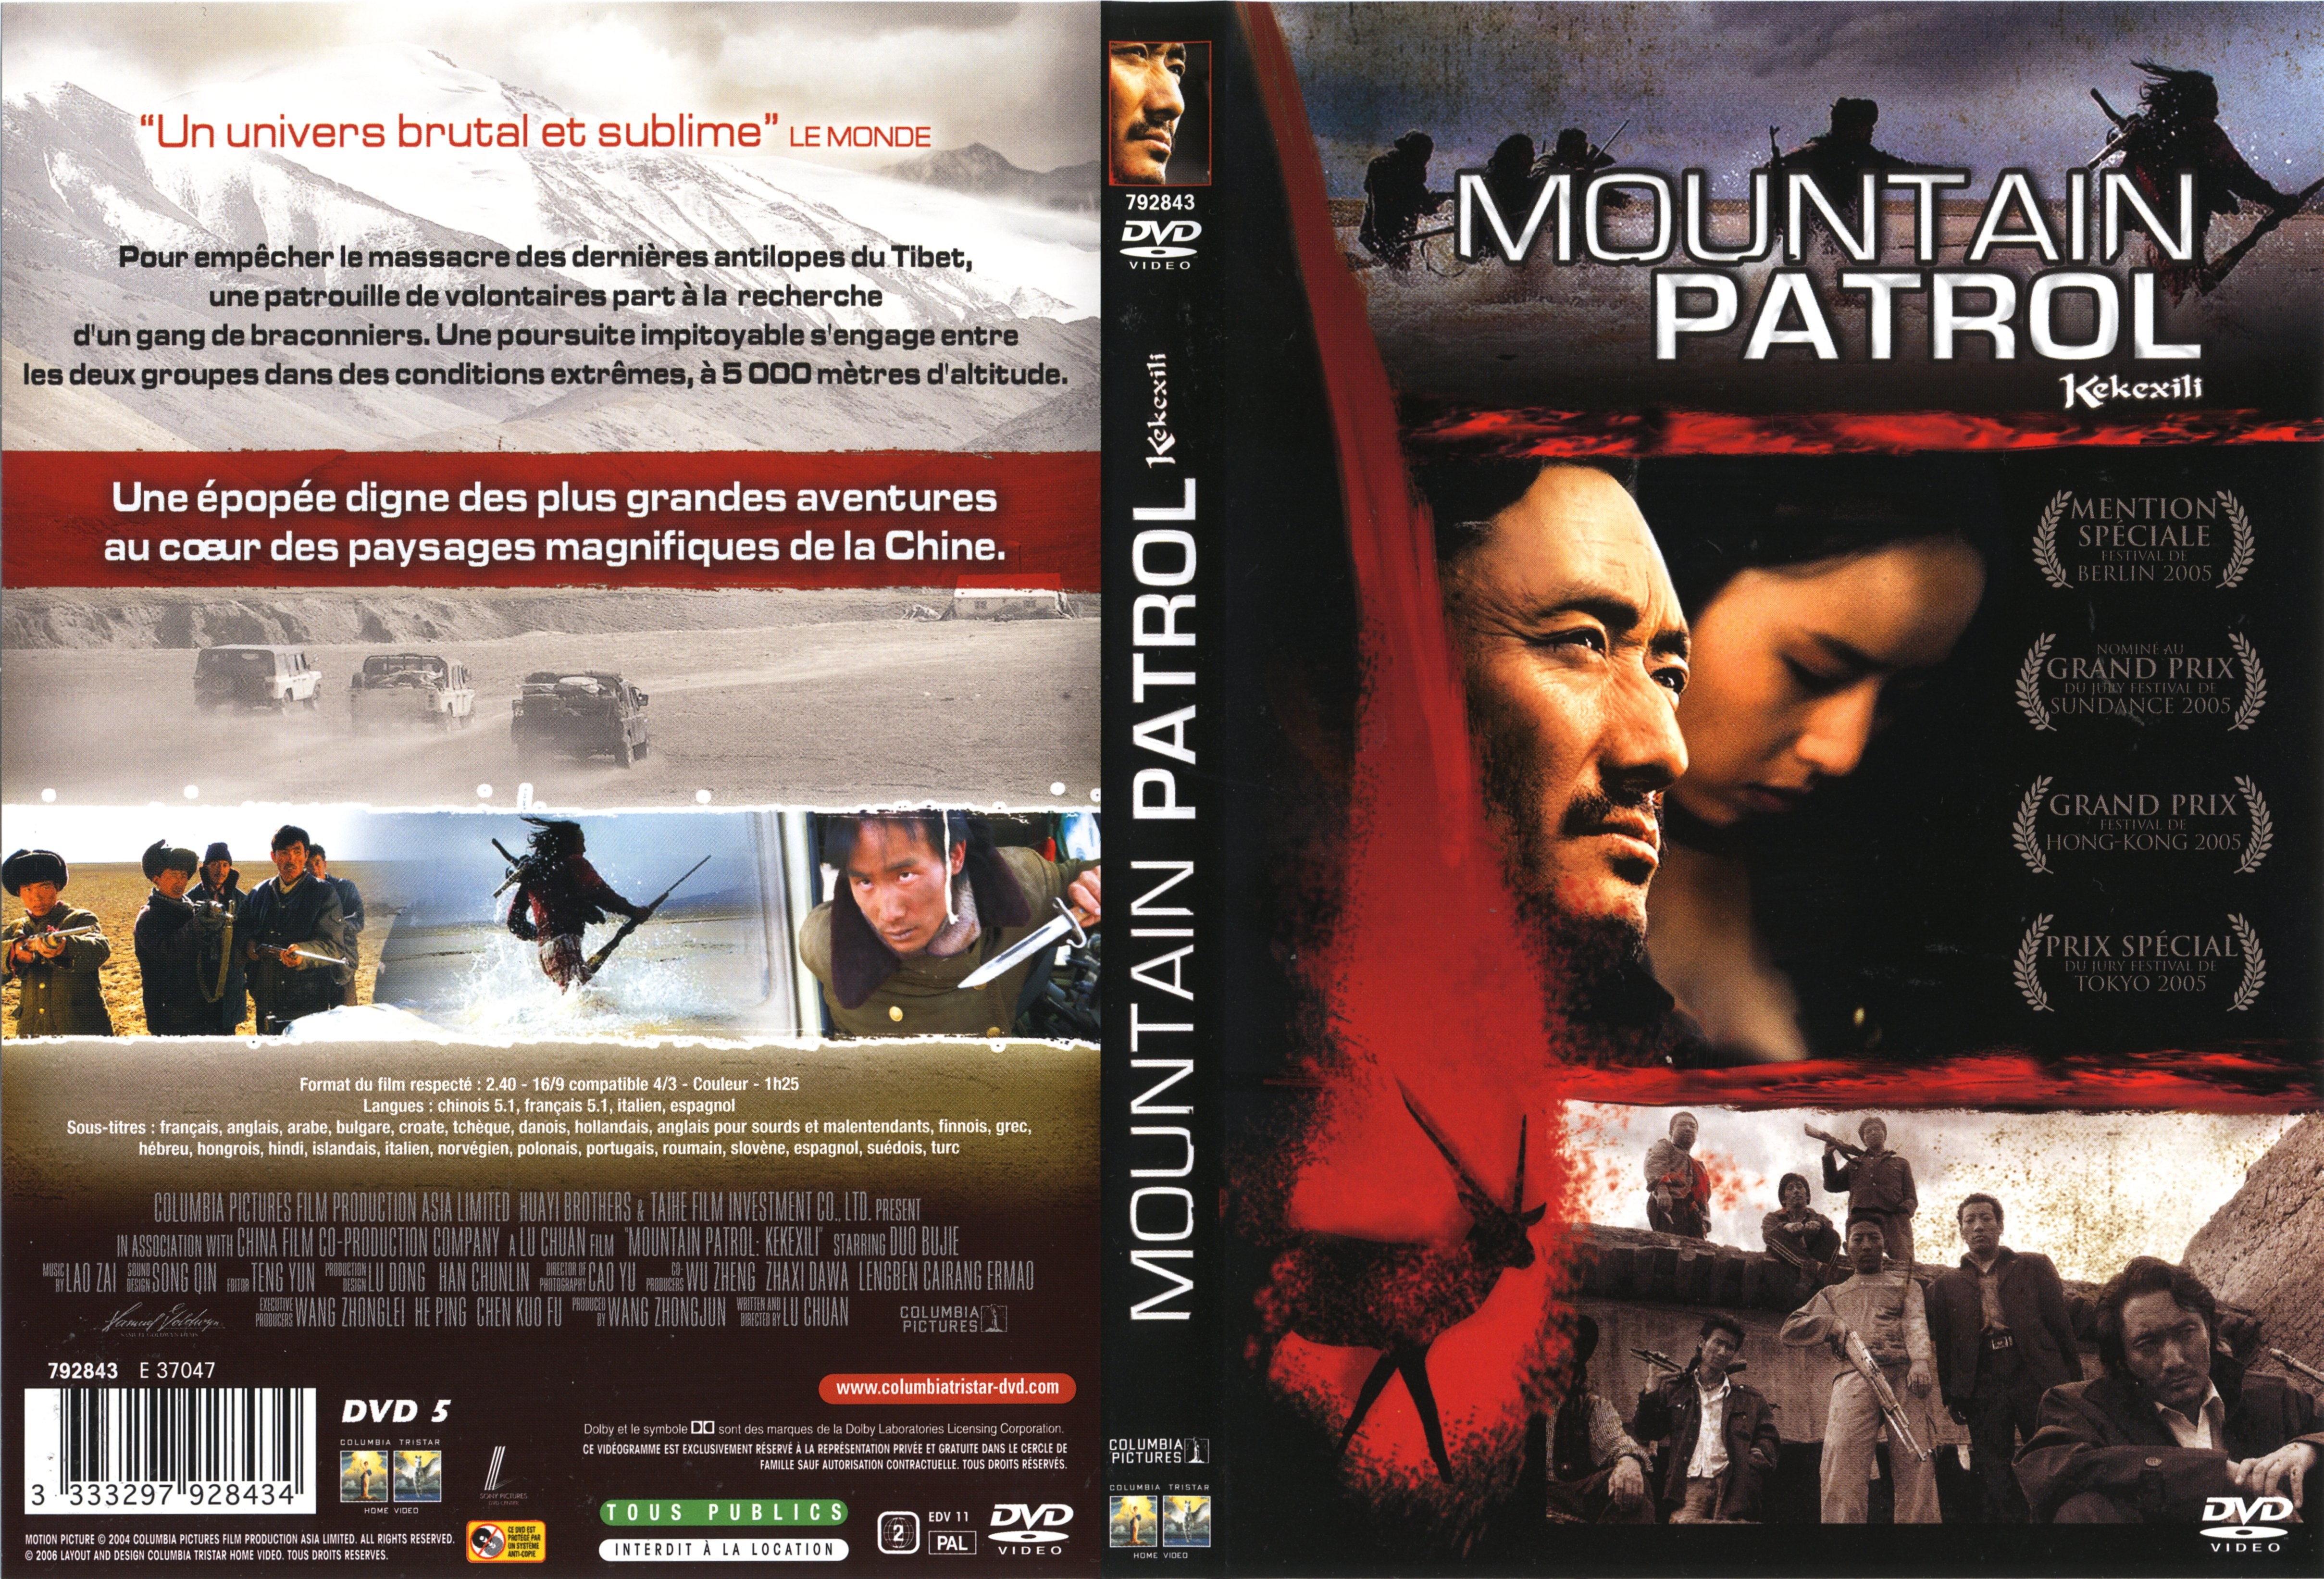 Jaquette DVD Mountain patrol kekexili